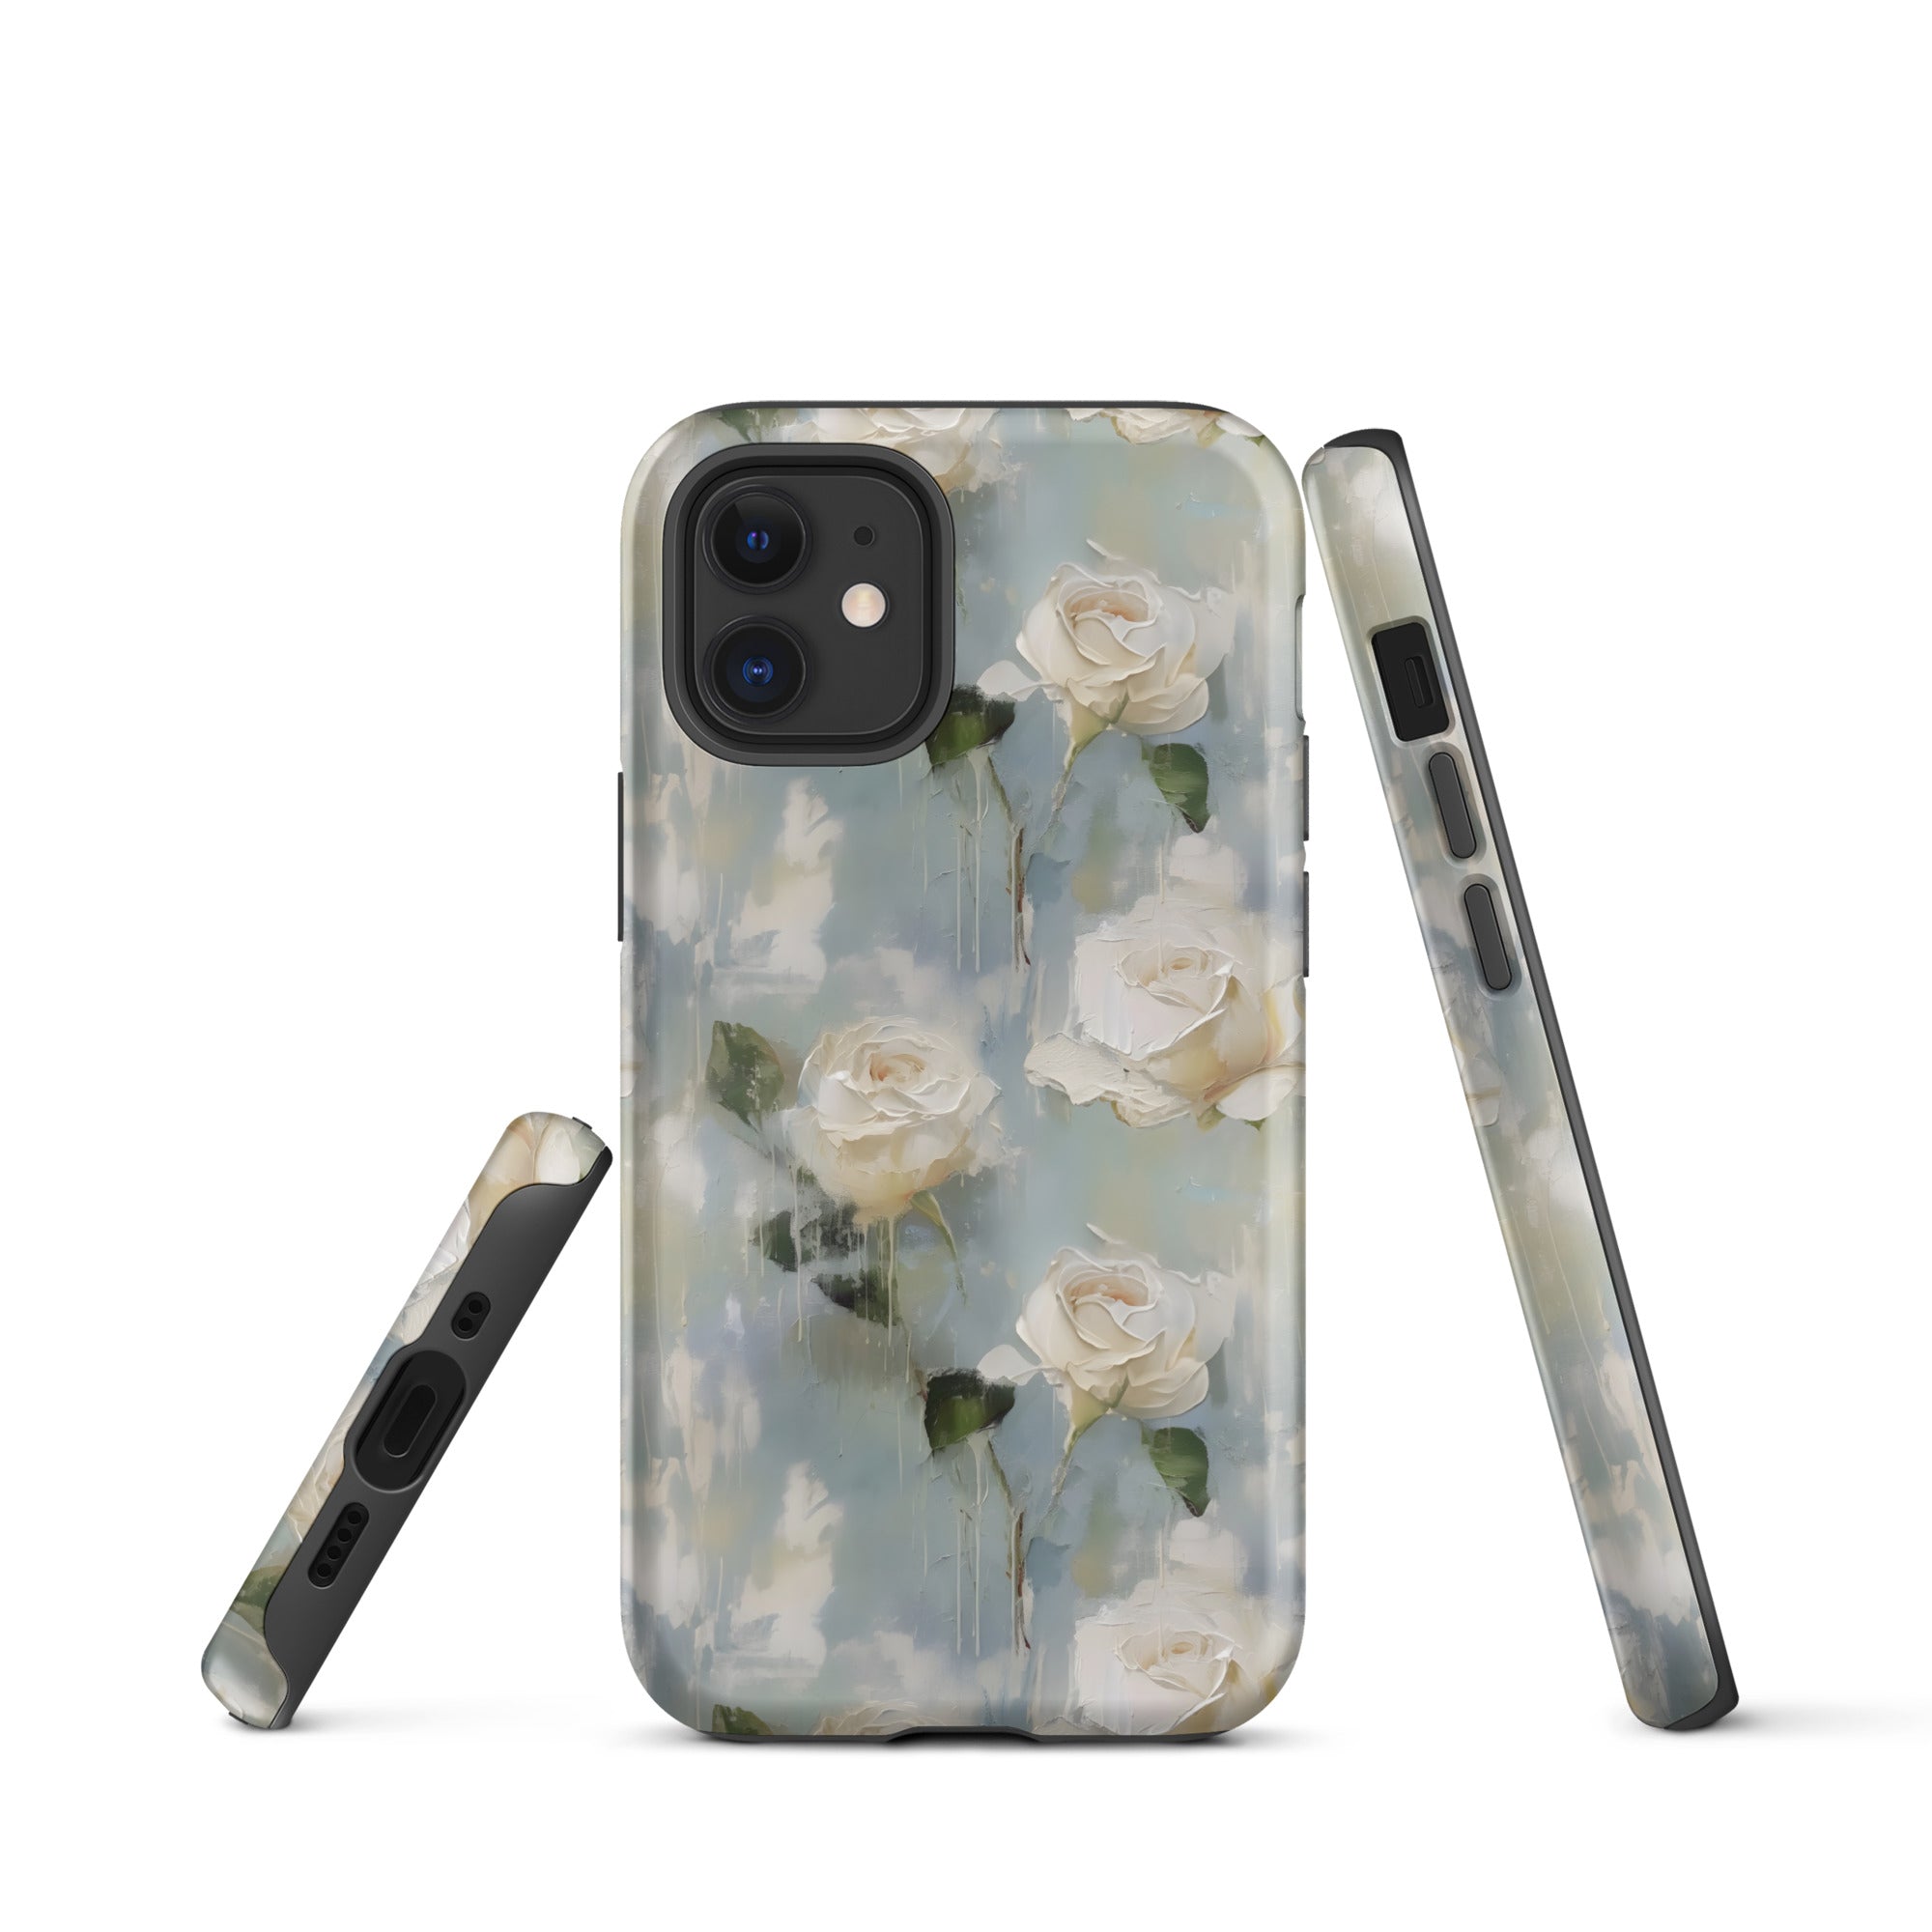 Ivory Rose - iPhone Case